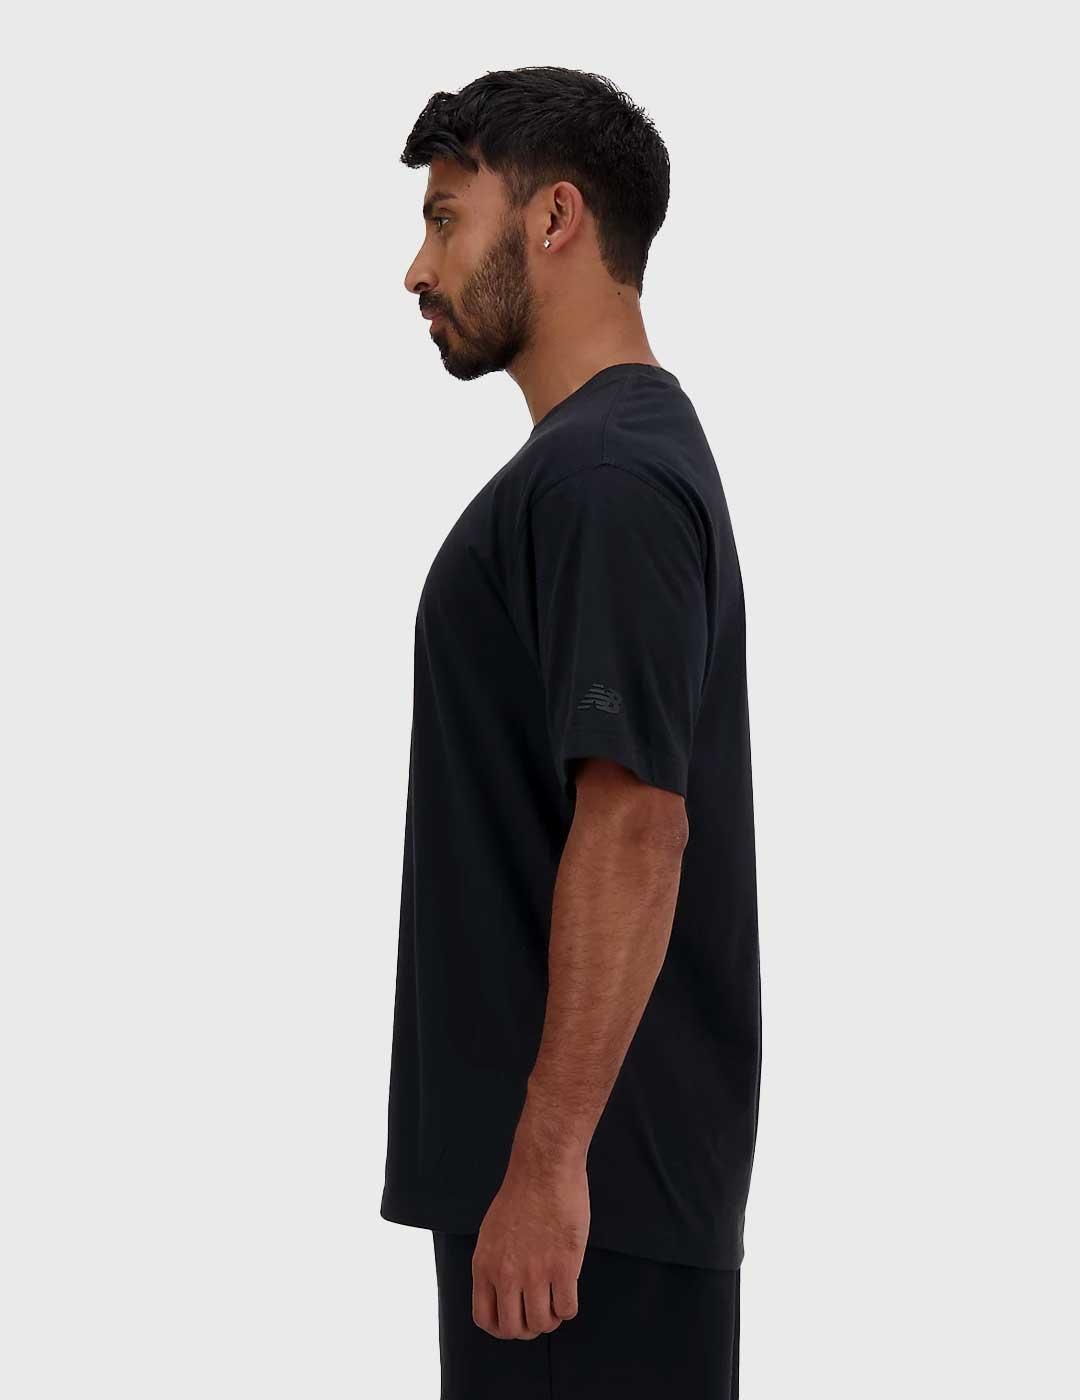 New Balance Hyper Density Graphic Camiseta negra para hombre